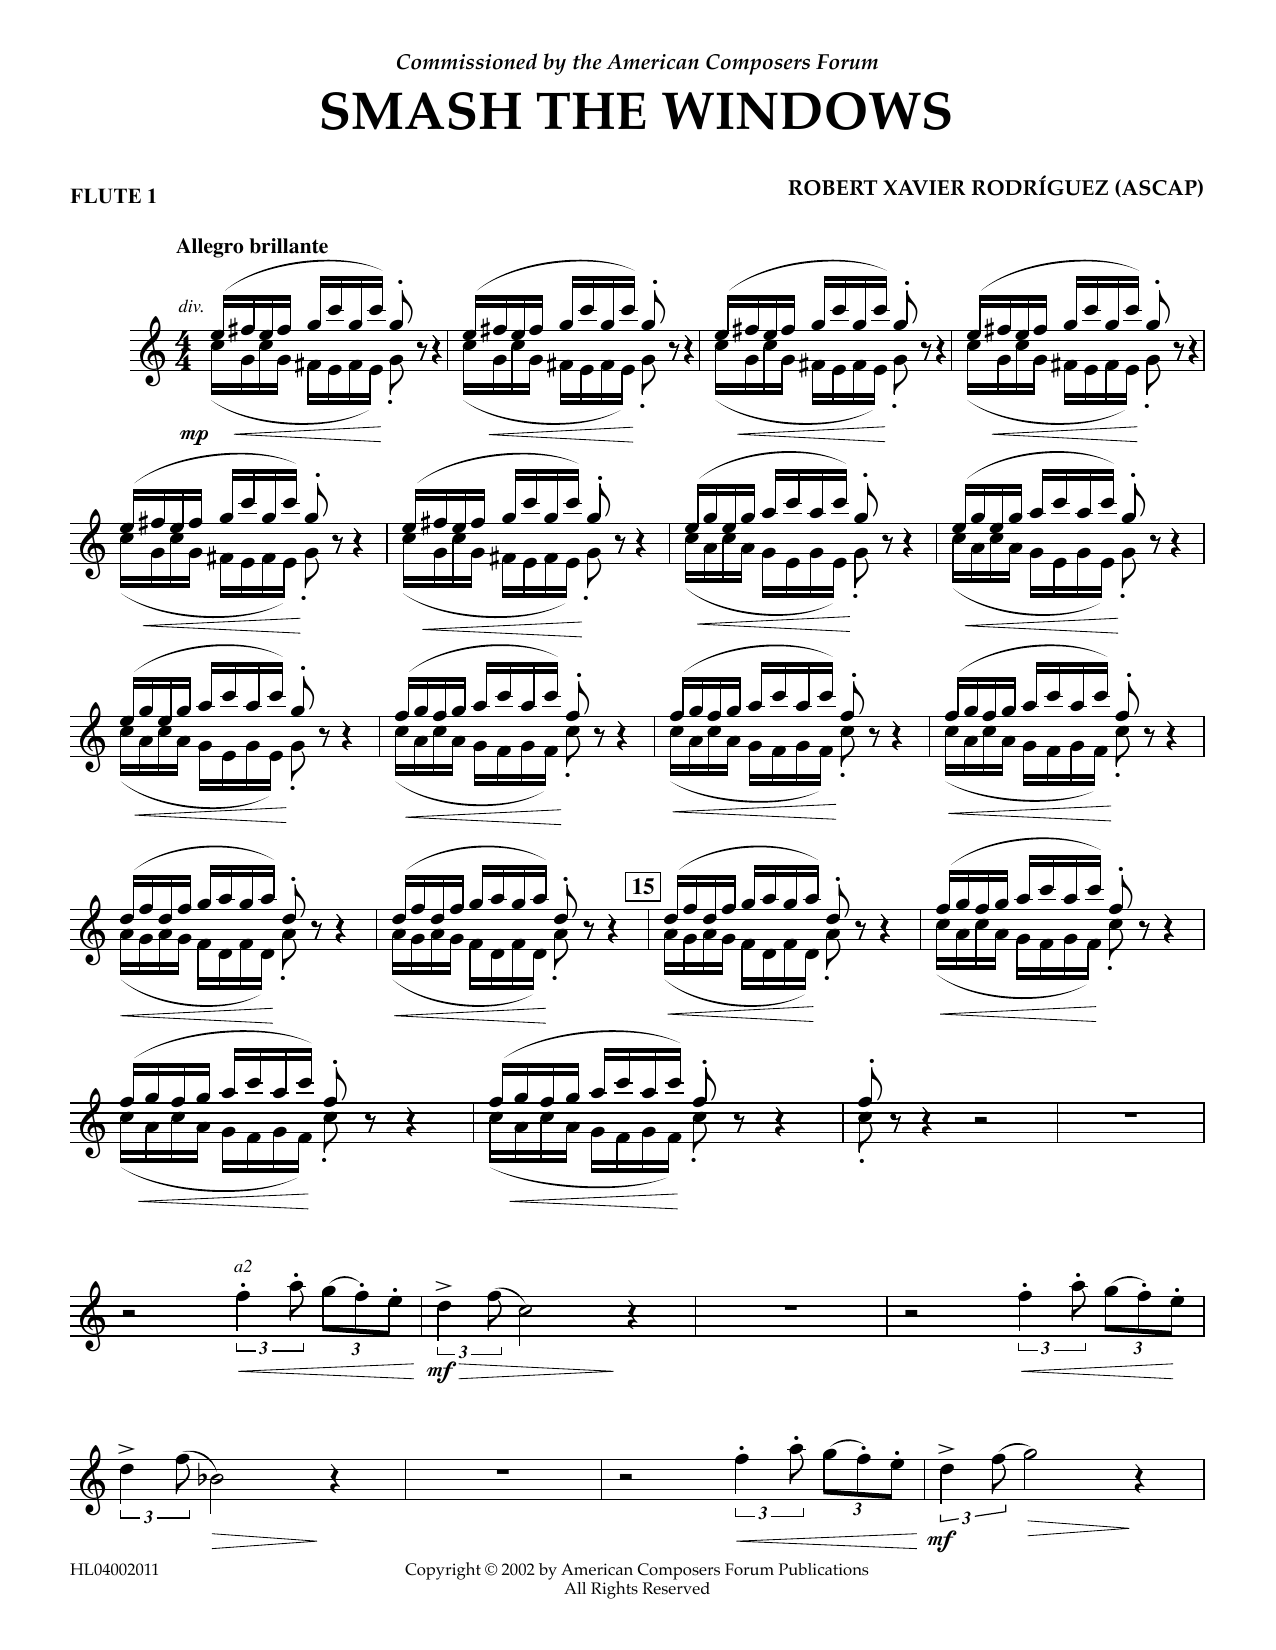 Robert Xavier Rodríguez Smash the Windows - Flute 1 Sheet Music Notes & Chords for Concert Band - Download or Print PDF